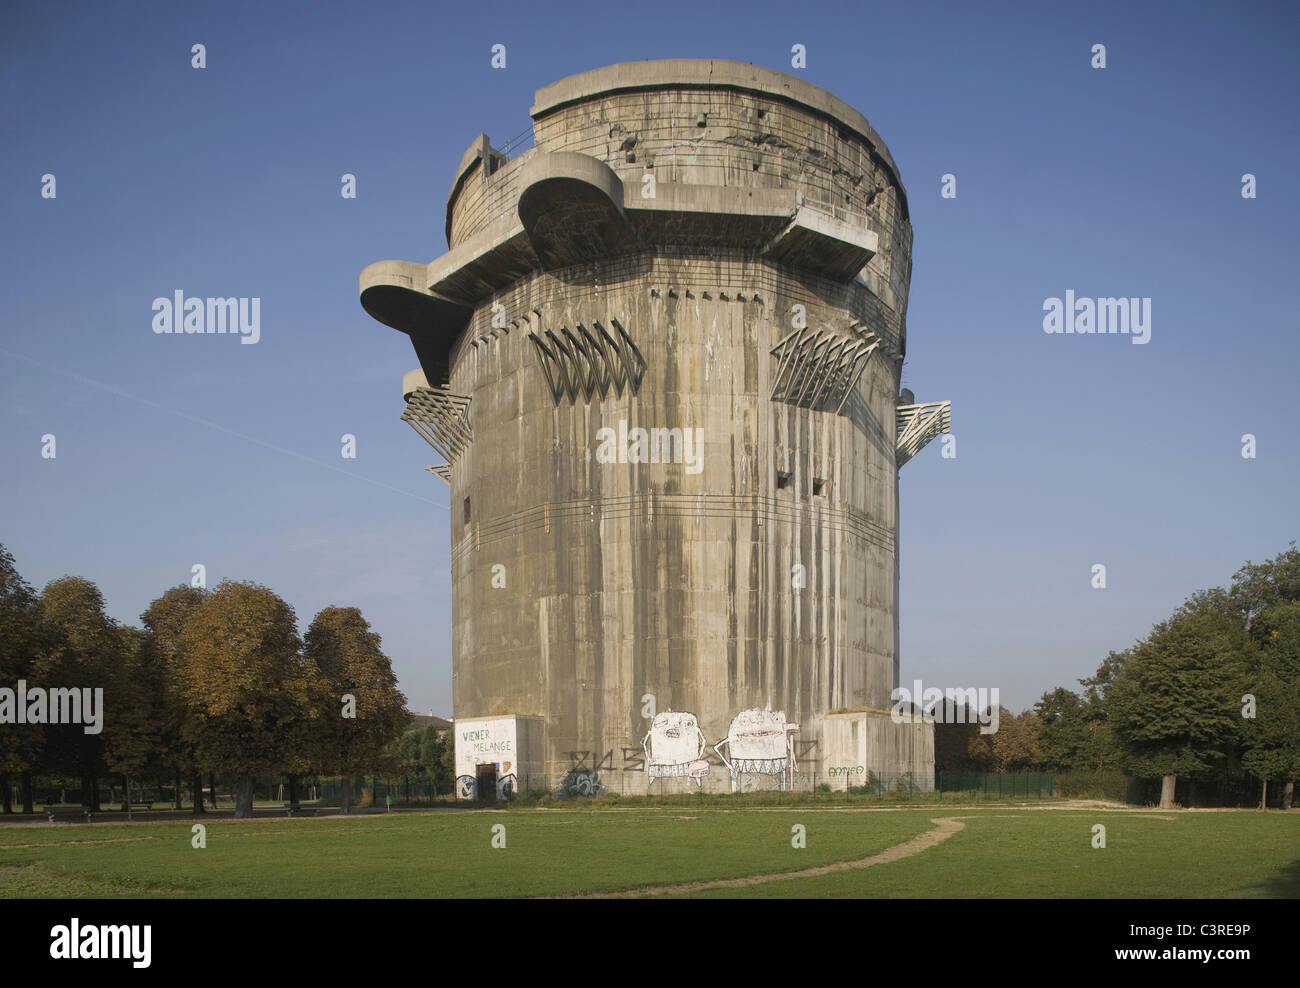 Austria, Vienna, Flak tower at park Stock Photo